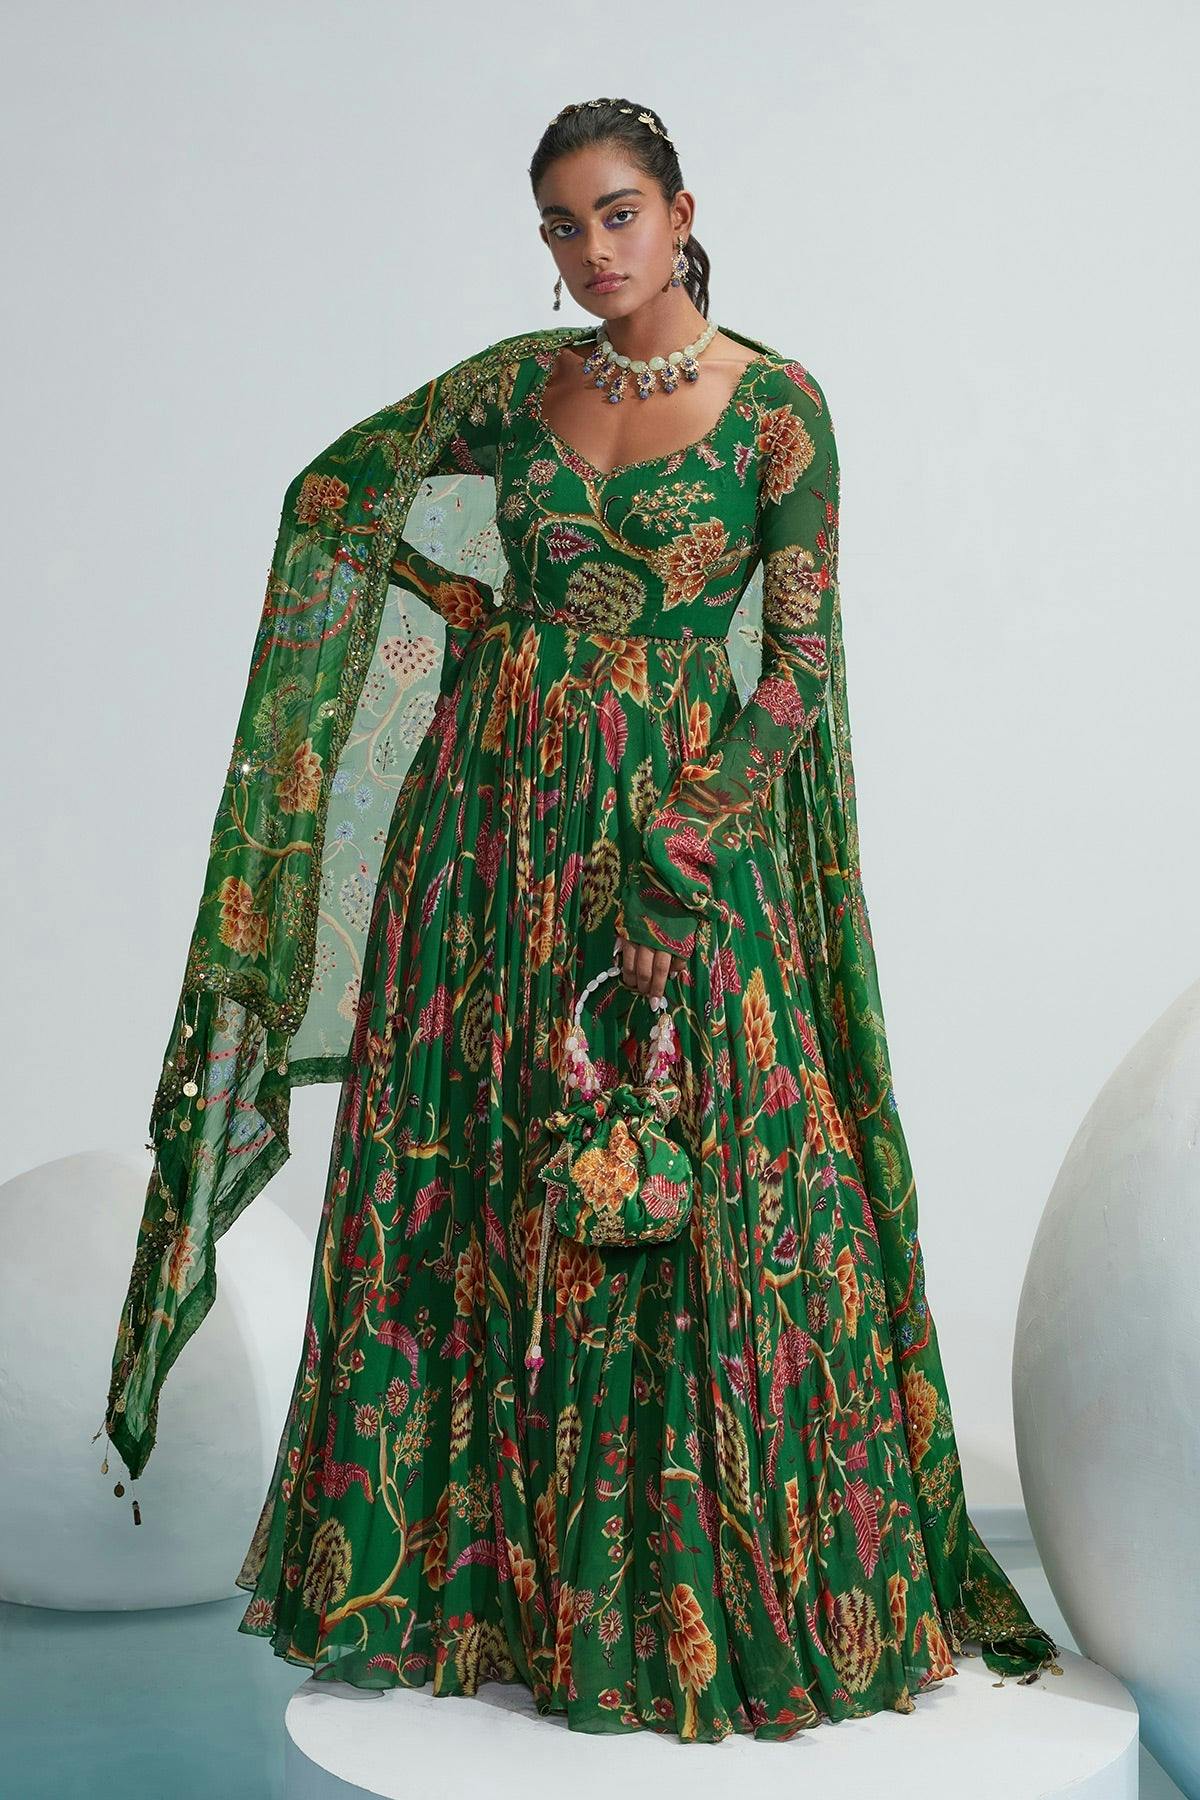 Sadia Khateeb In Marwa, a product by Mahima Mahajan